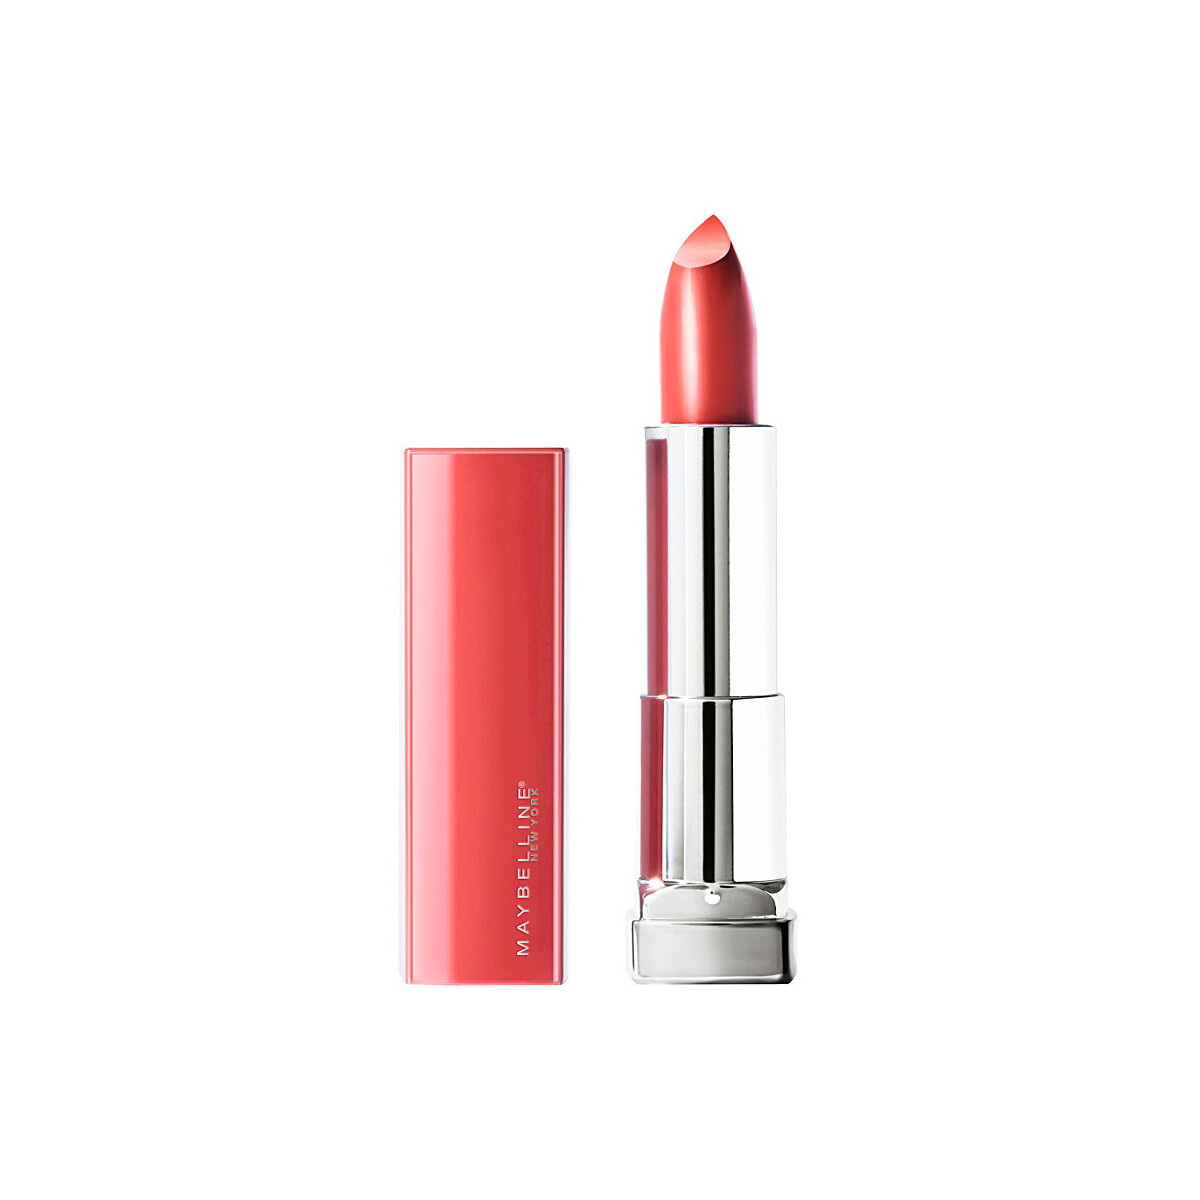 Beauté Femme Rouges à lèvres Maybelline New York Color Sensational Made For All 373-mauve For Me 